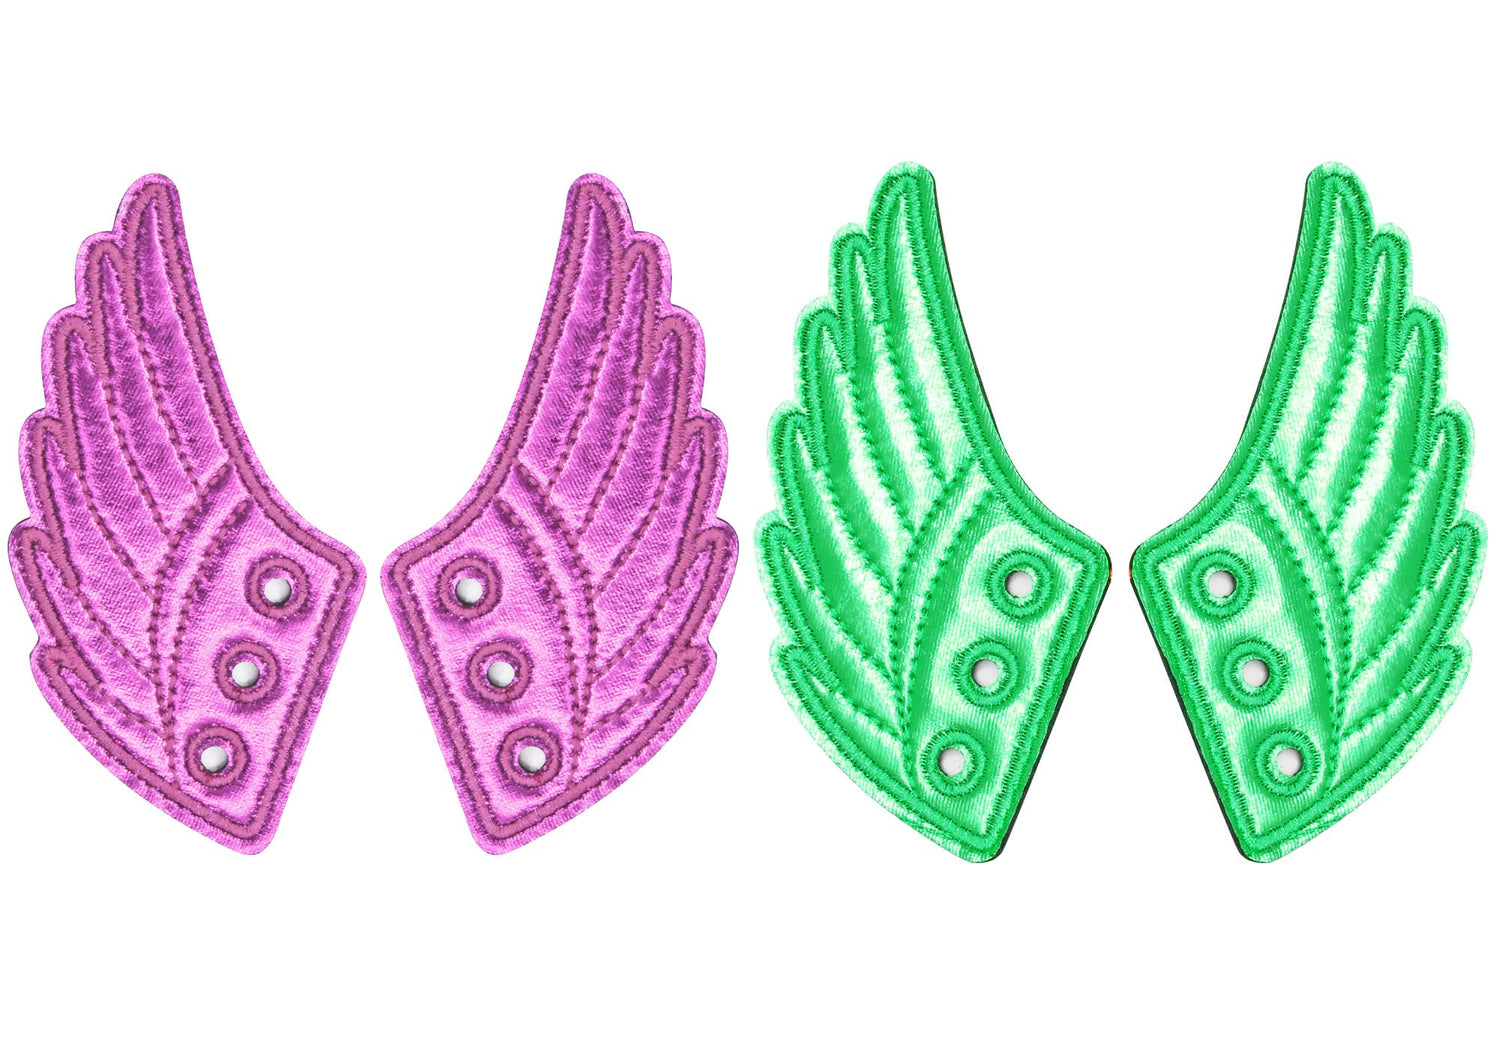 DAZCOS Wings for Shoes Skates Canvas Decoration Mini Angel Bat Costume Accessories (Purple &amp; Yellow)